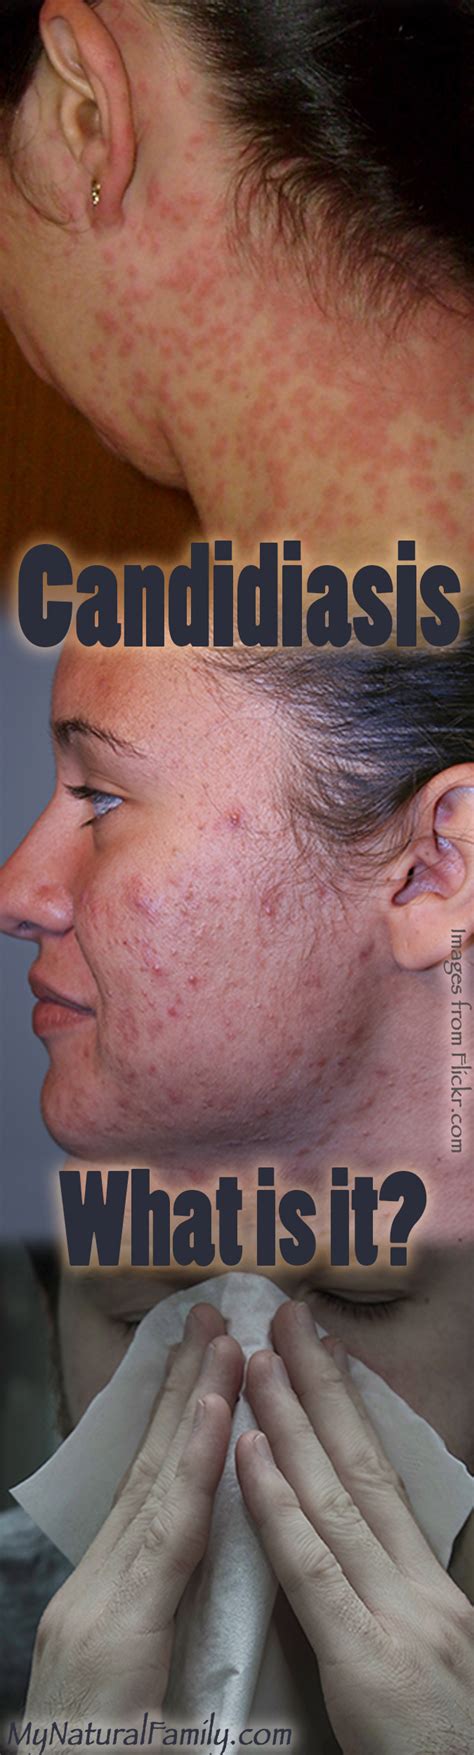 Candidiasis Skin Rash Treatment